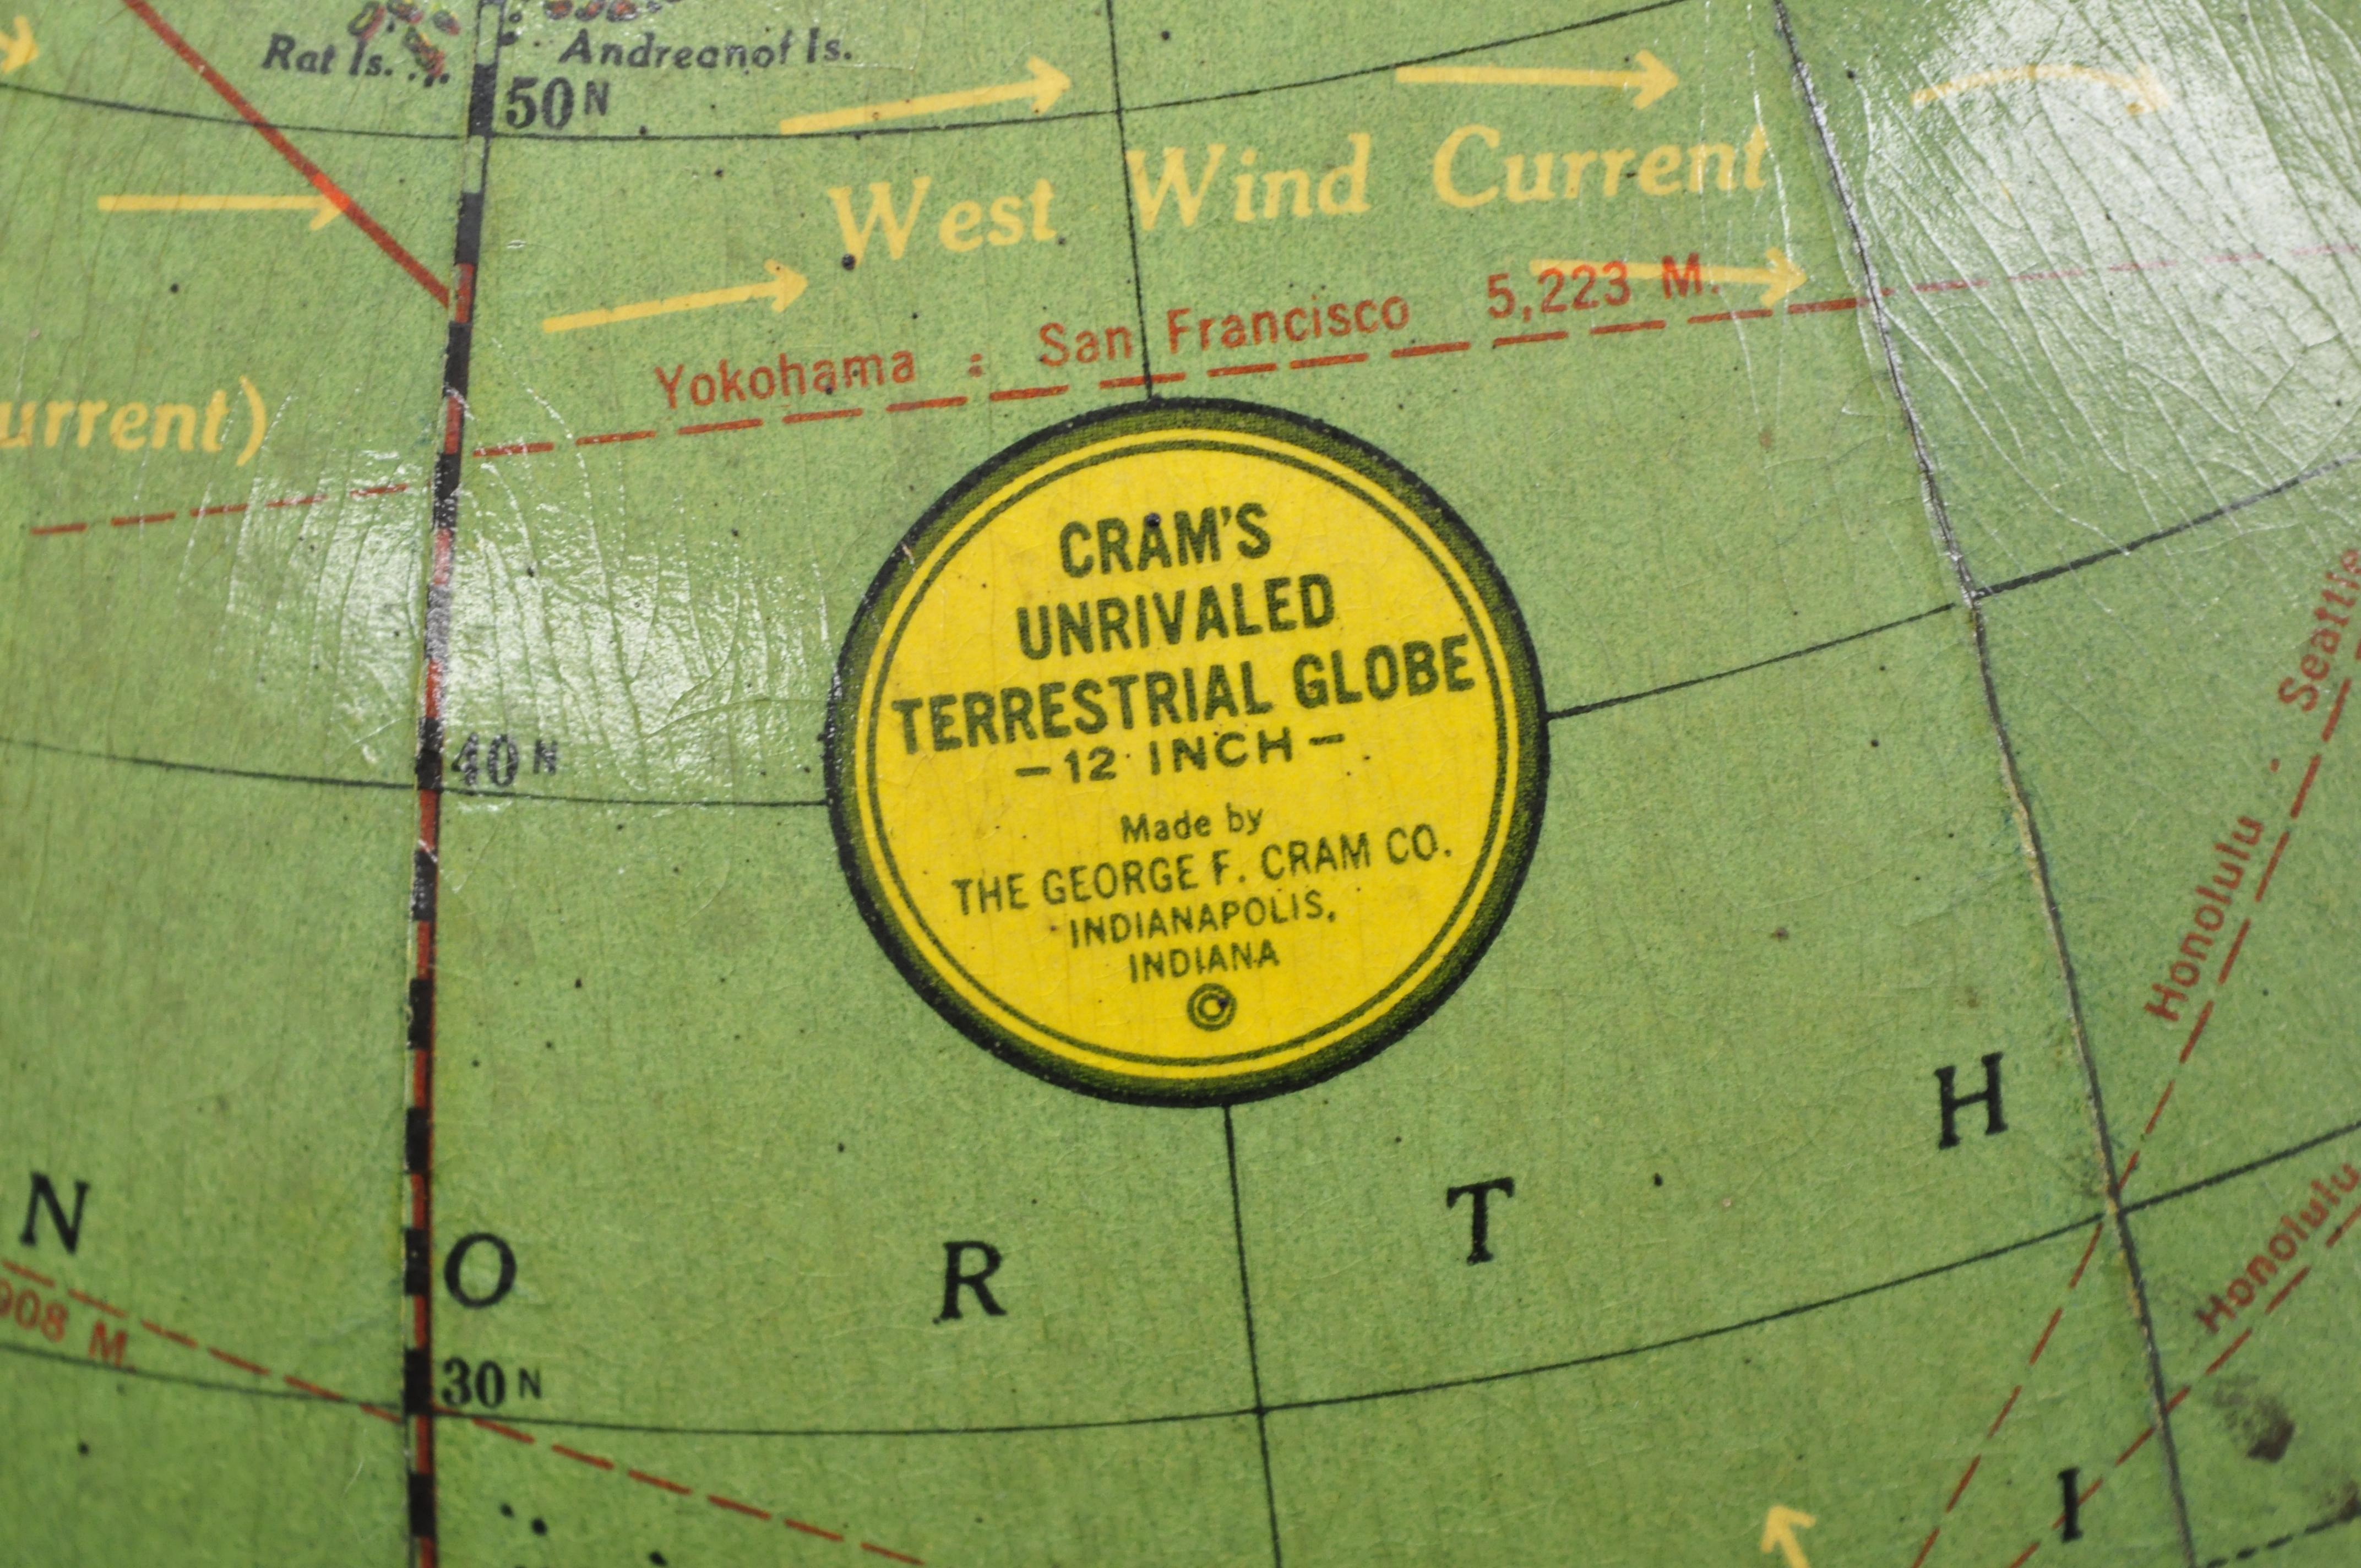 Glass George F. Cram Unrivaled Terrestrial Illuminated Stand Up Floor Globe 1